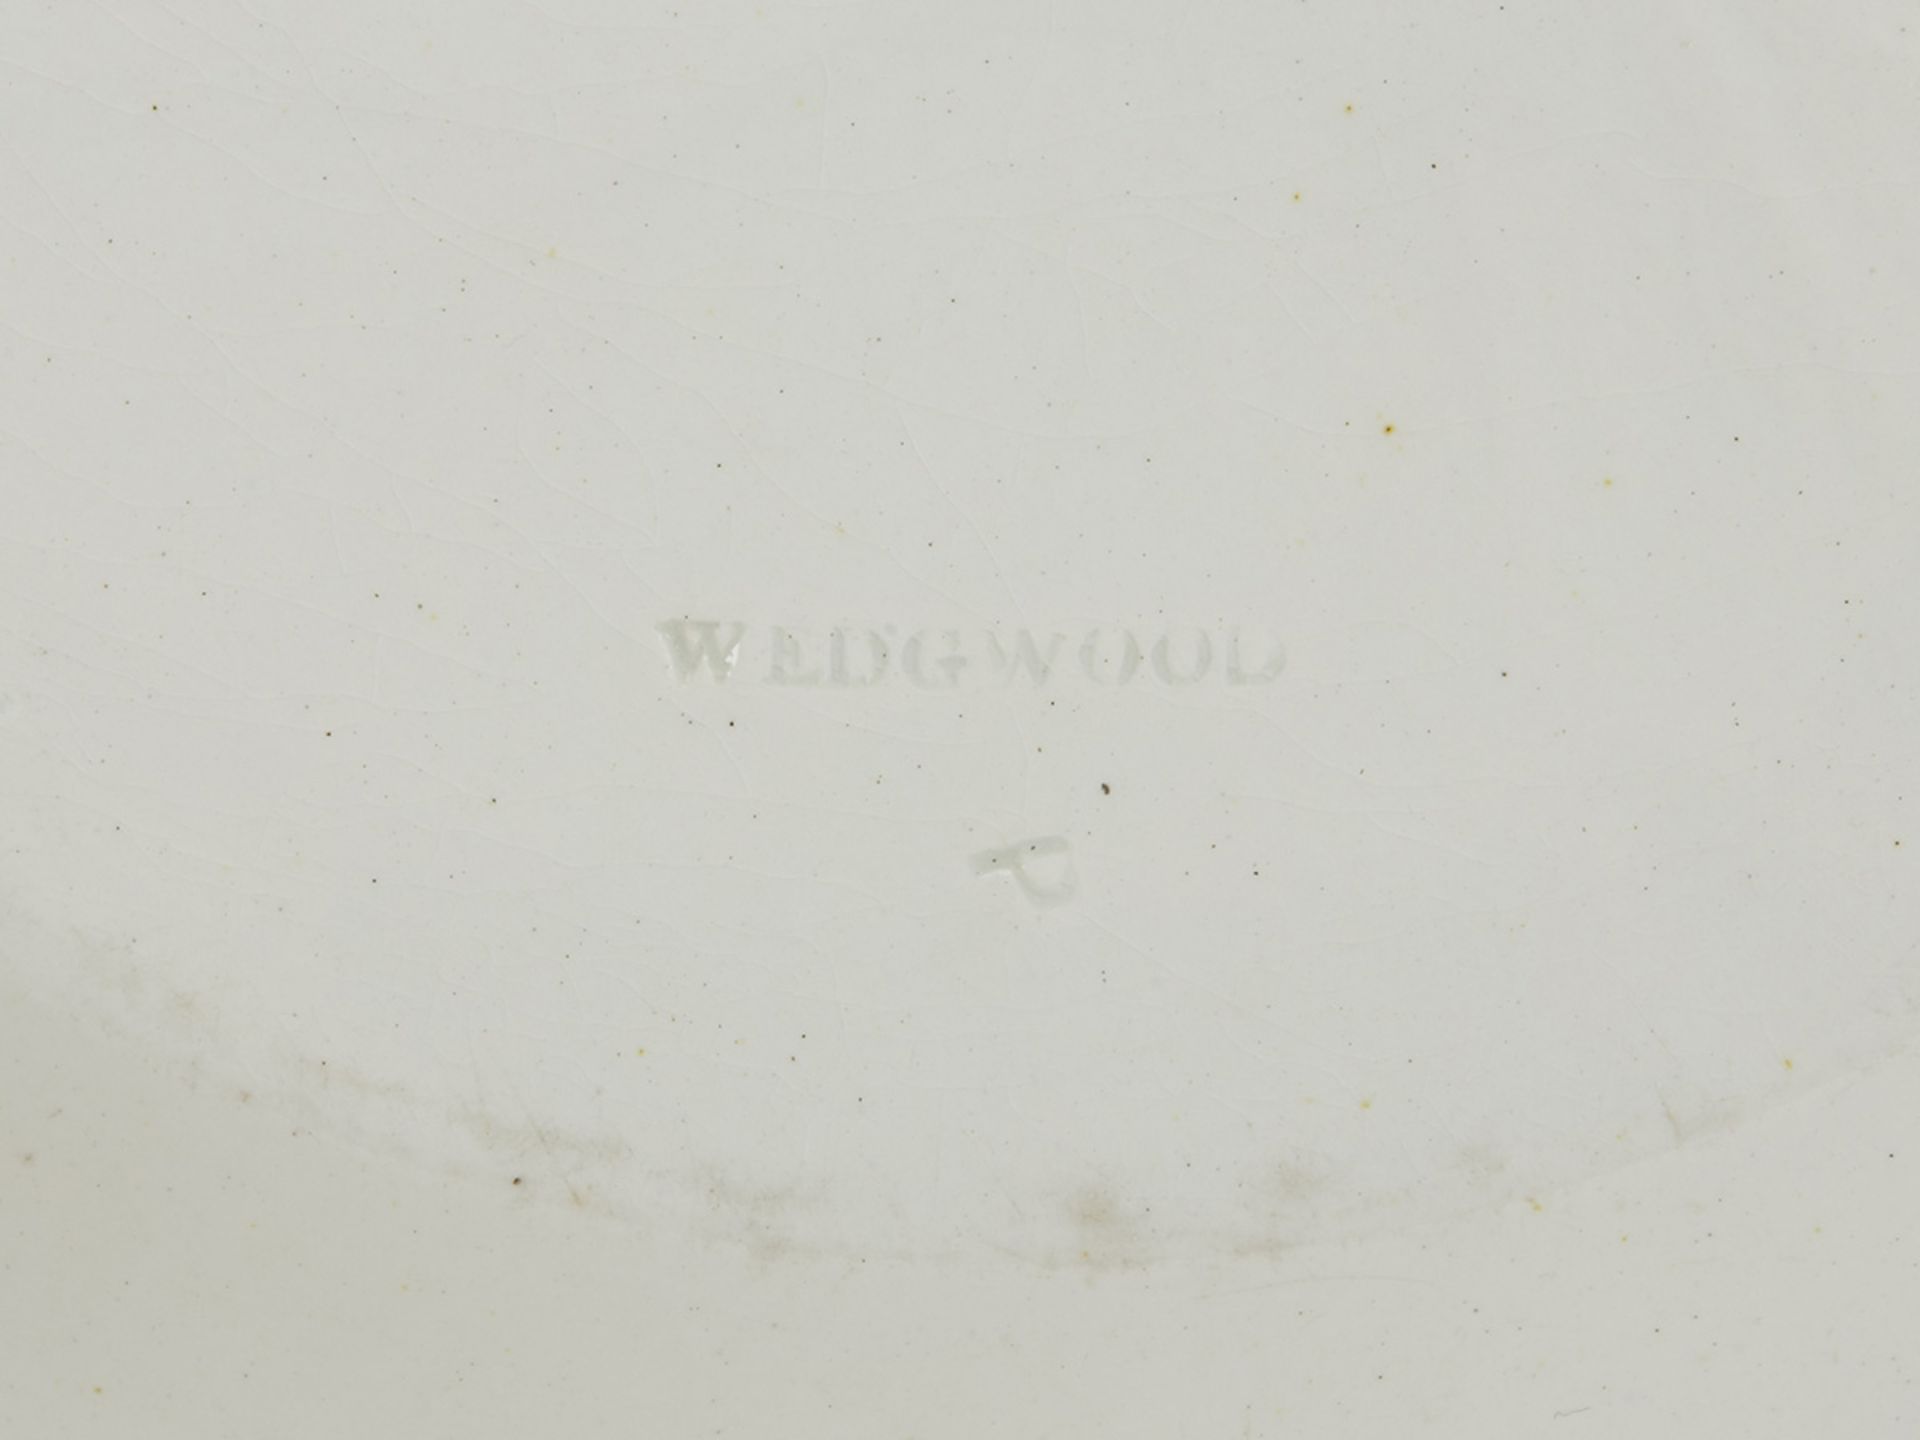 PAIR ANTIQUE WEDGWOOD MAJOLICA LEAF PLATES c.1860 - Image 6 of 7